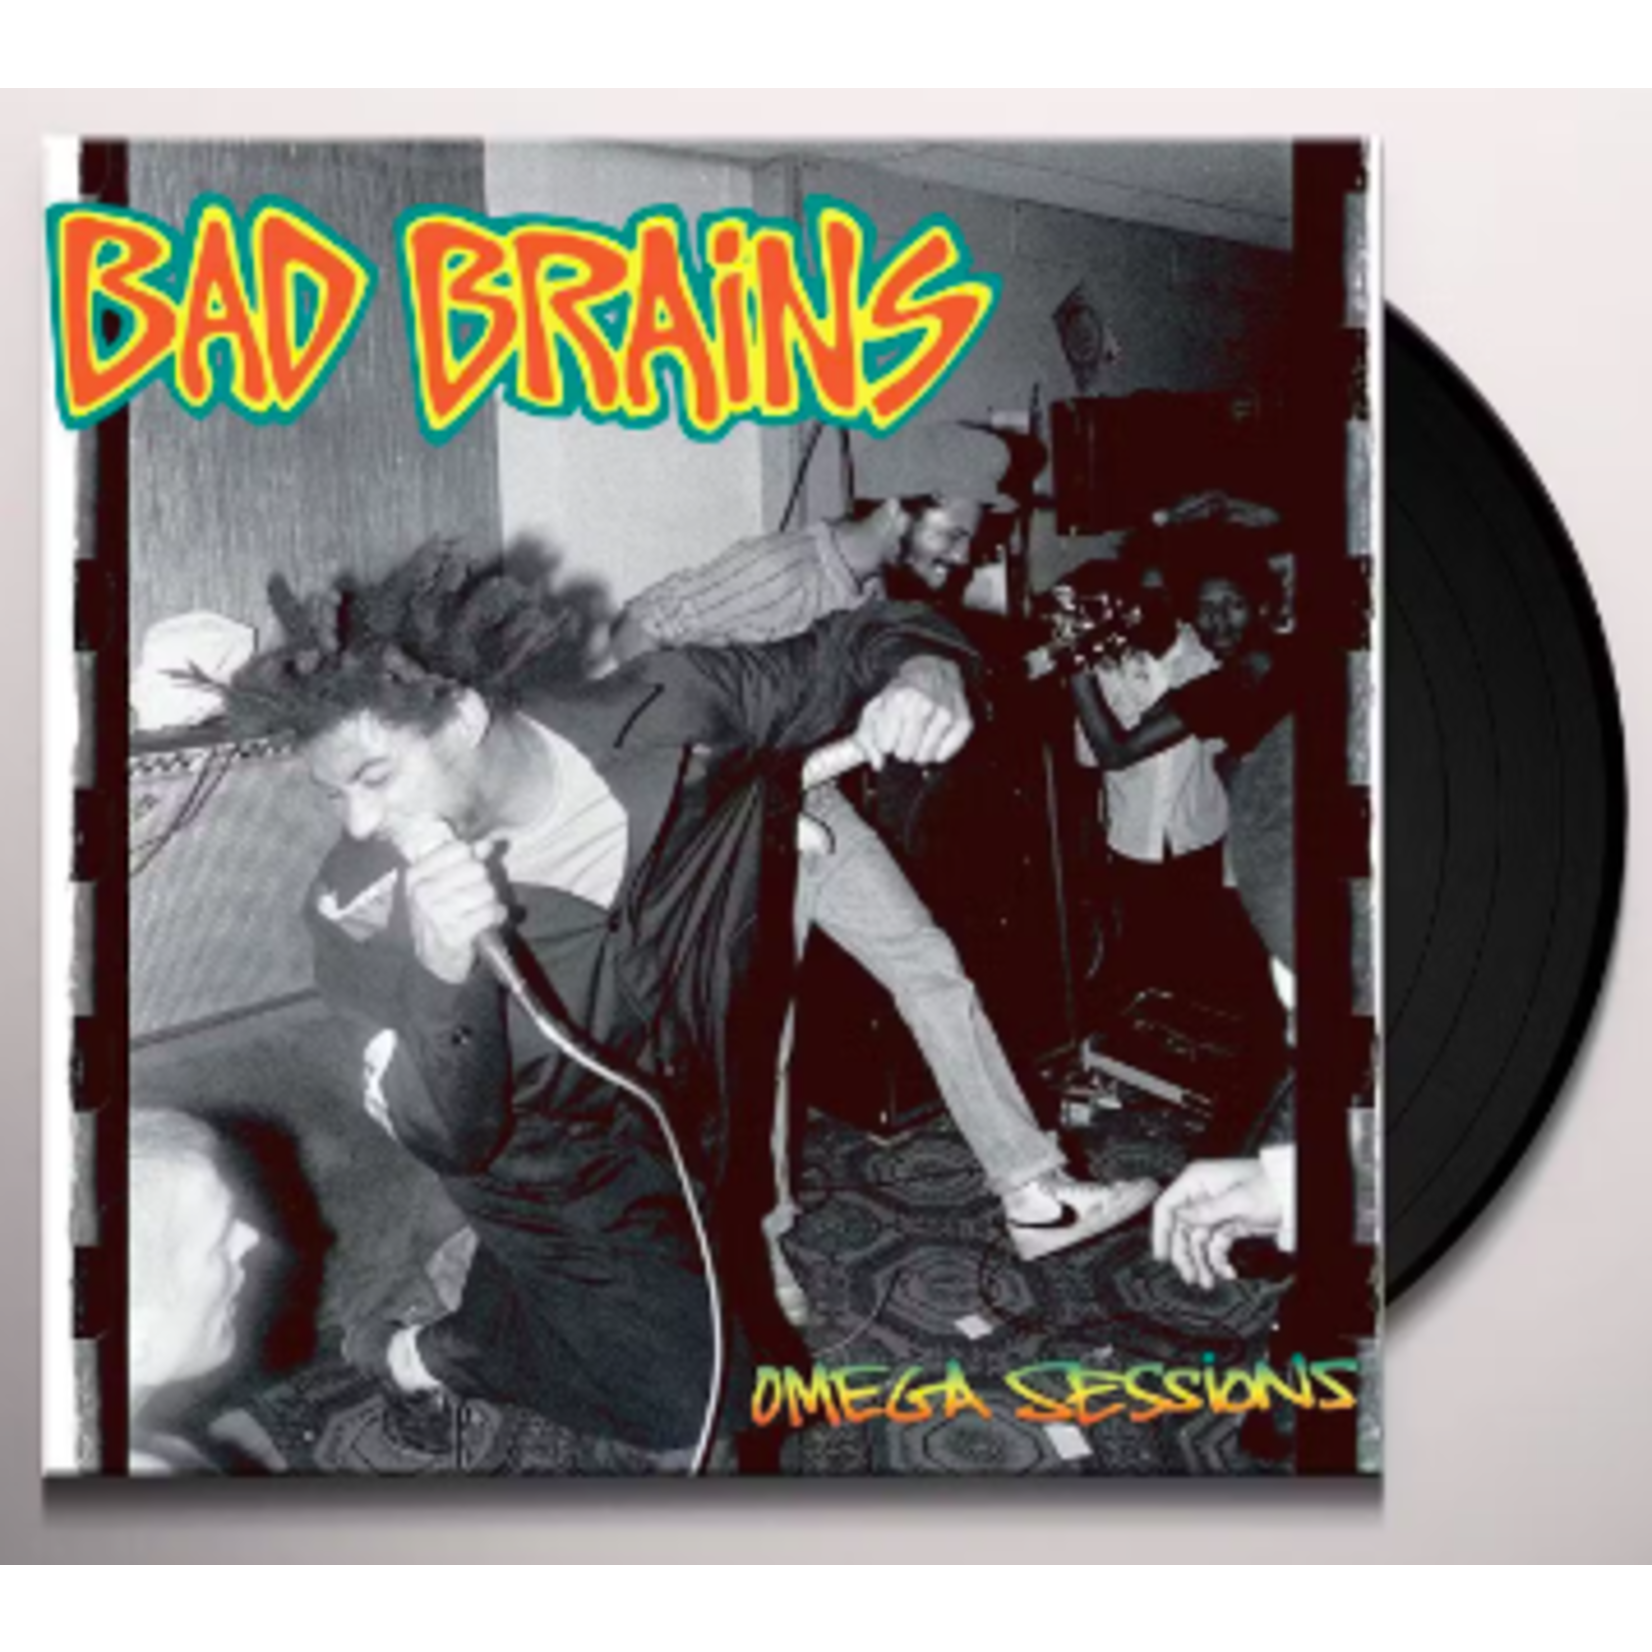 [New] Bad Brains: Omega Sessions (12